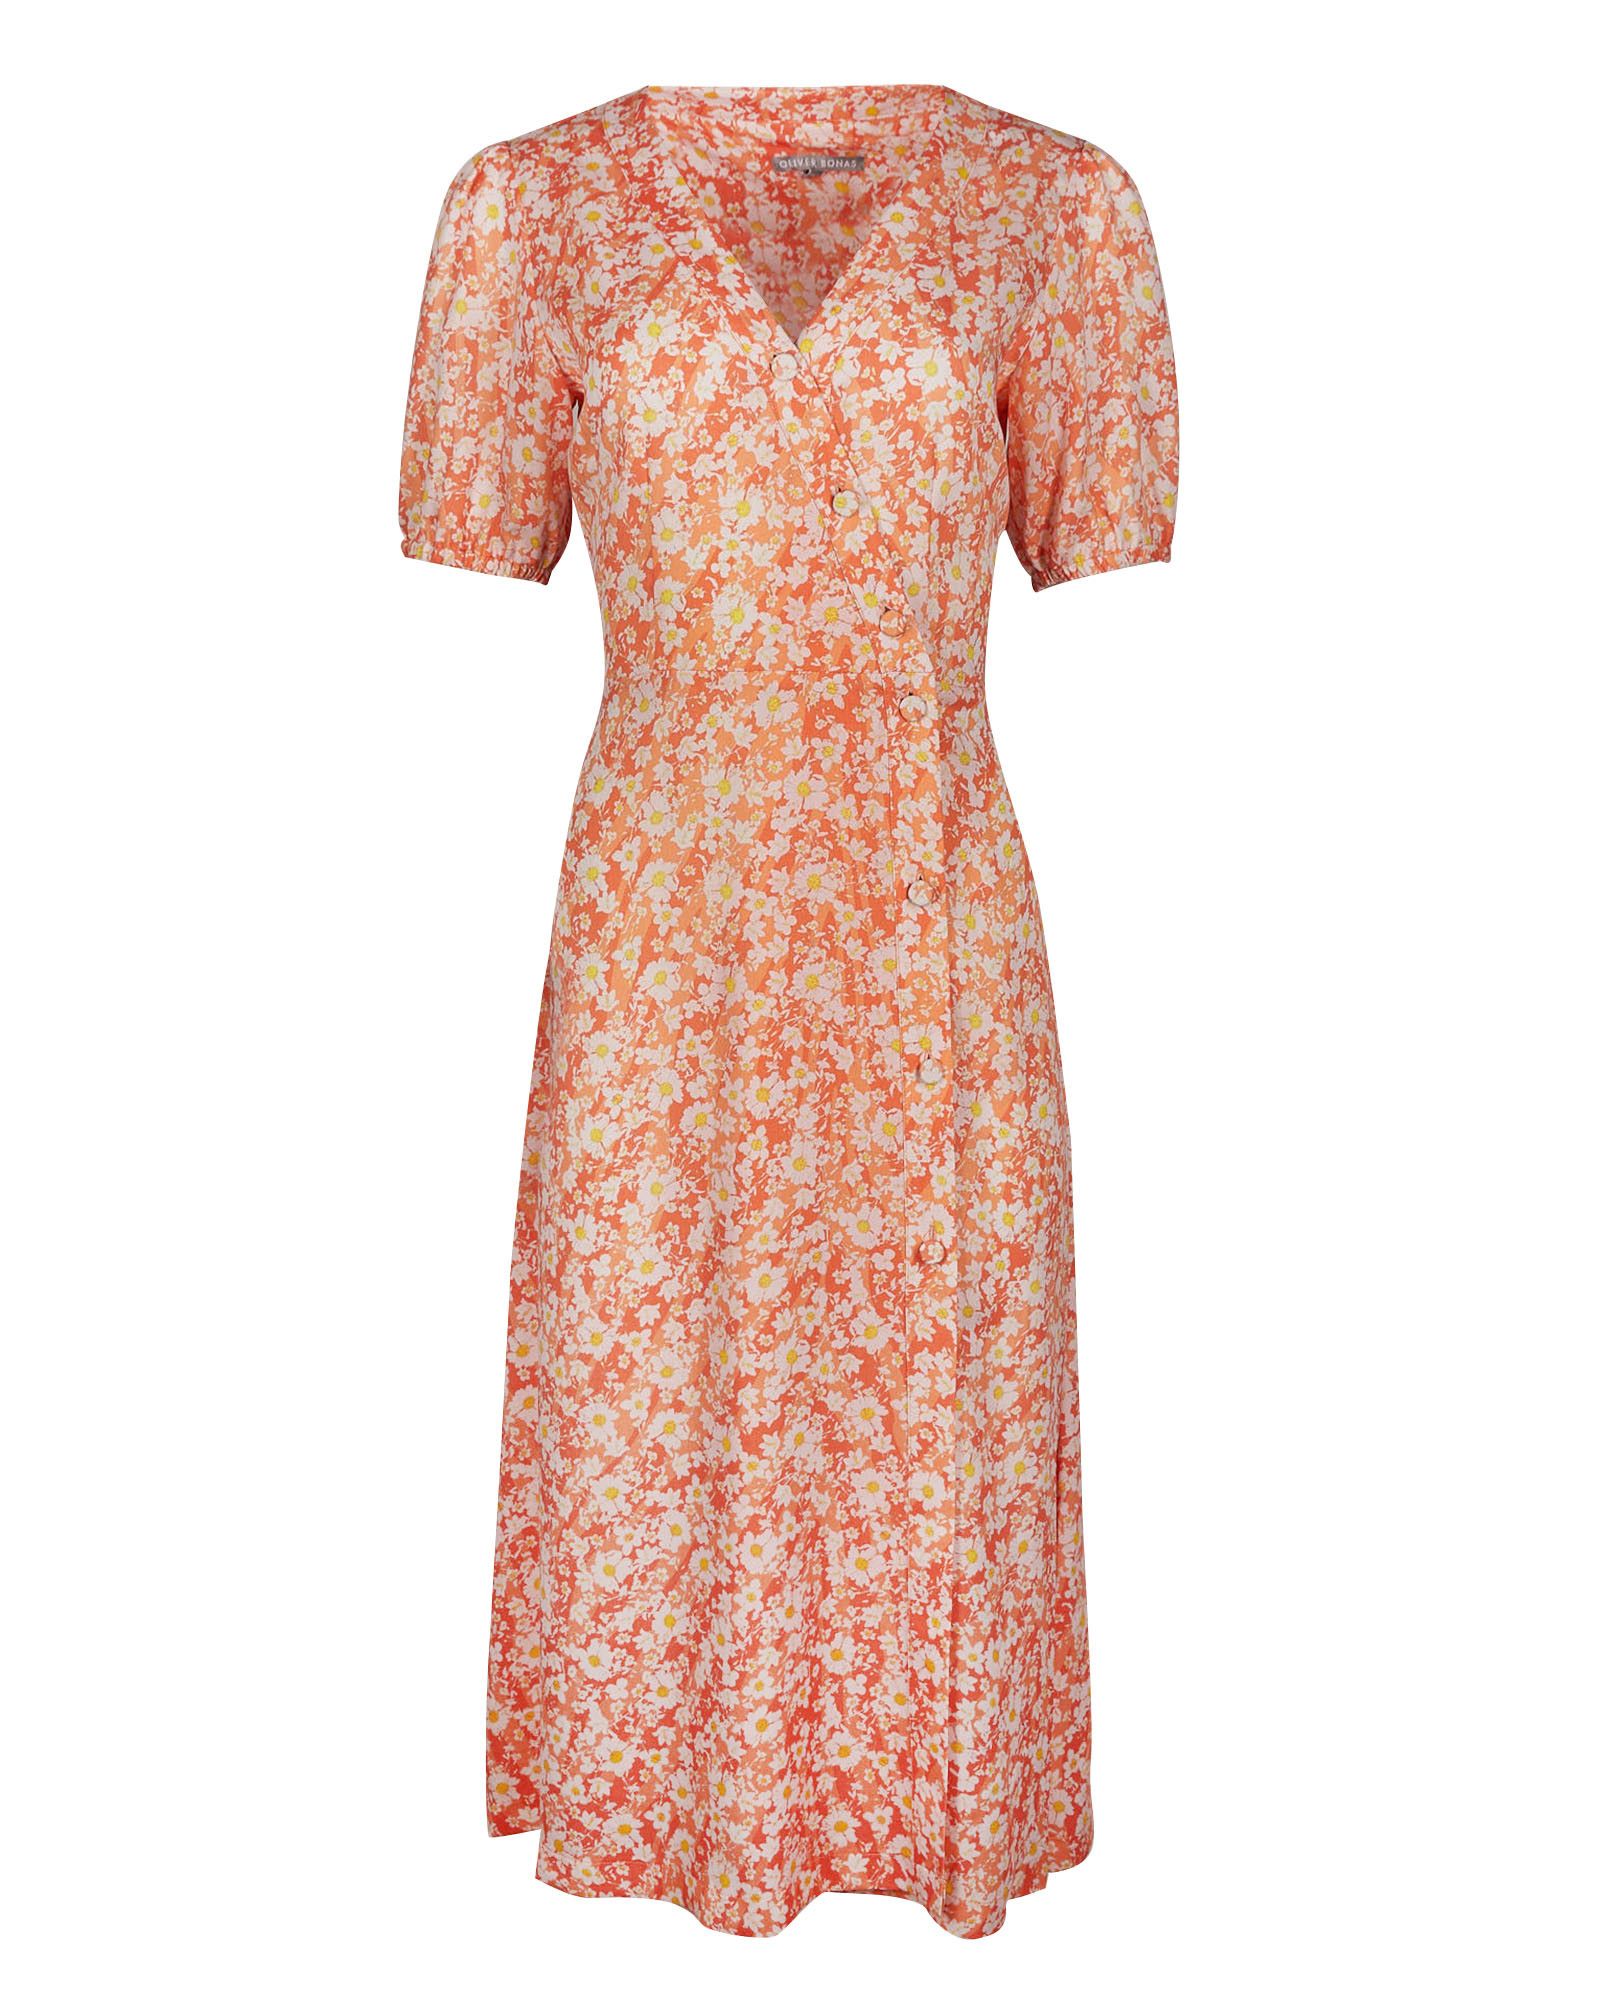 Wild Daisy Floral Print Orange Midi Wrap Dress | Oliver Bonas